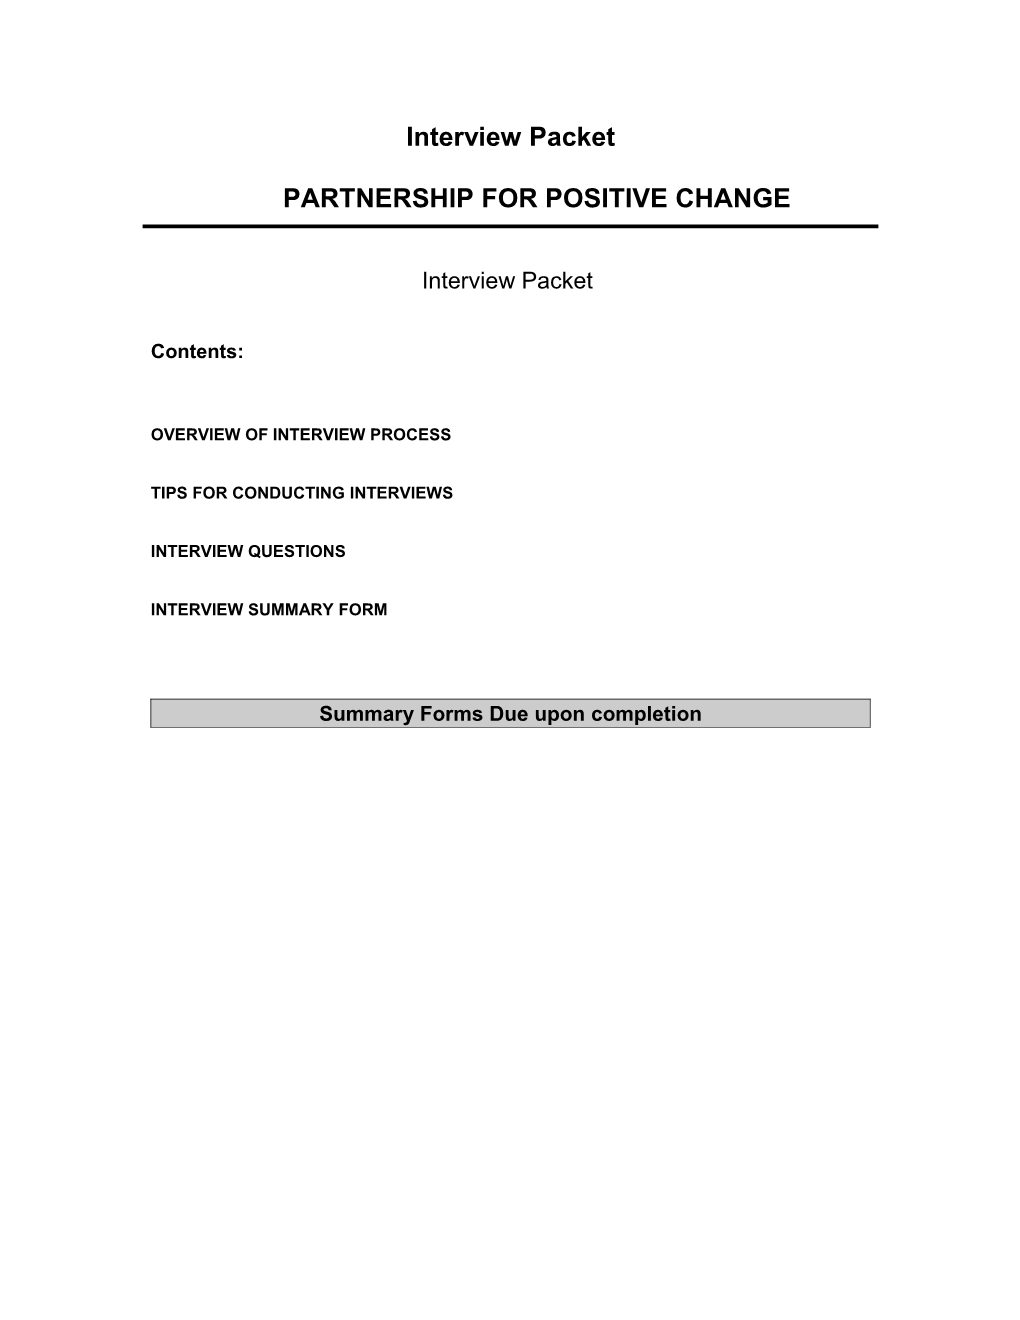 Partnership for Positive Change